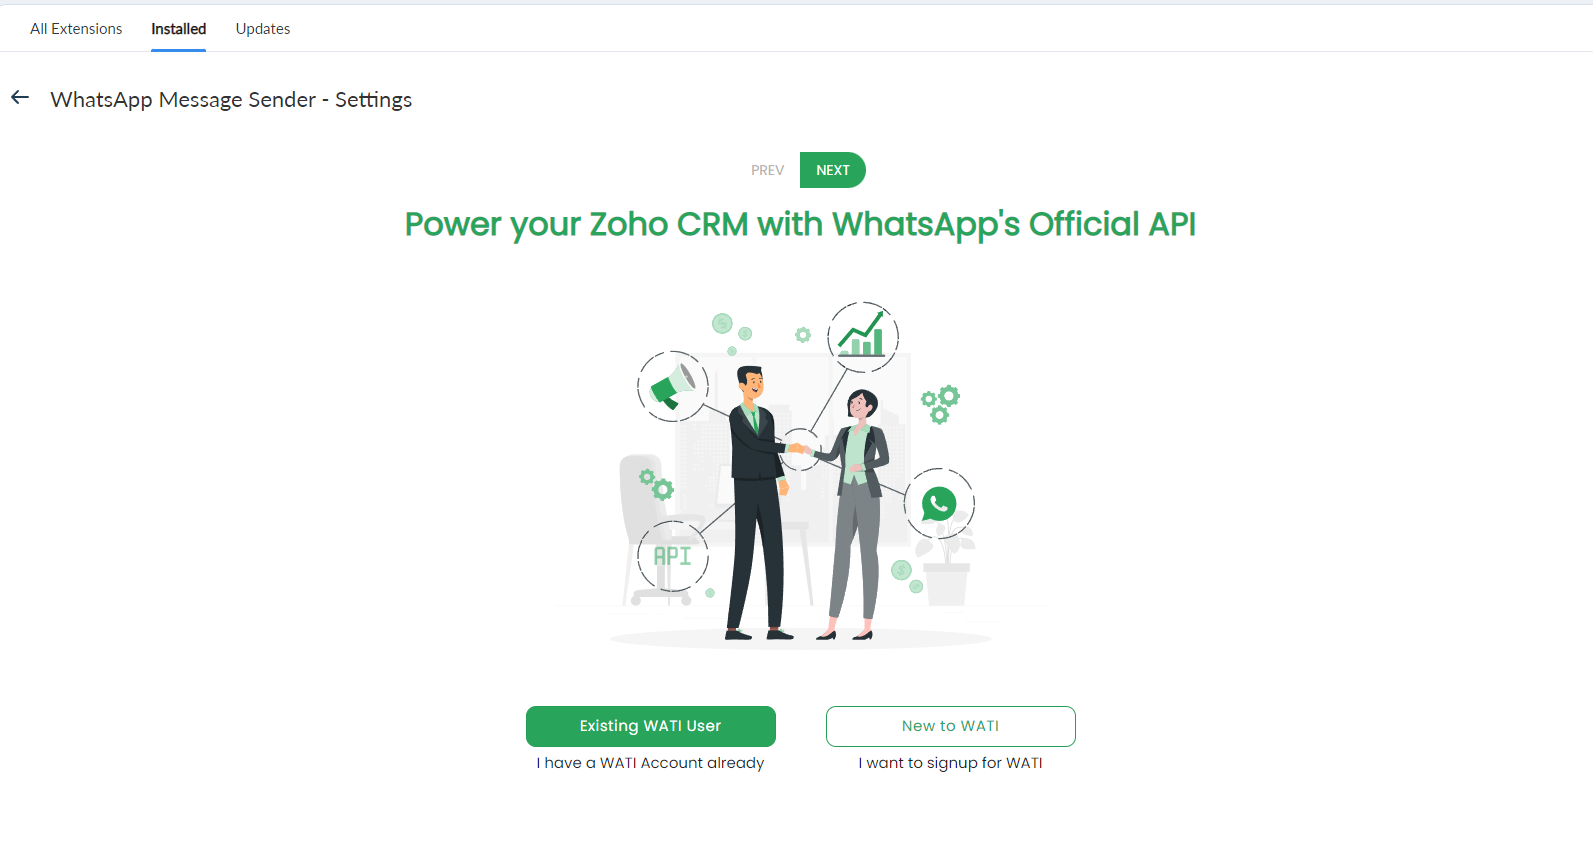 WATI - WhatsApp Team Inbox - API WhatsApp - CRM WhatsApp - Integração Zoho CRM WhatsApp